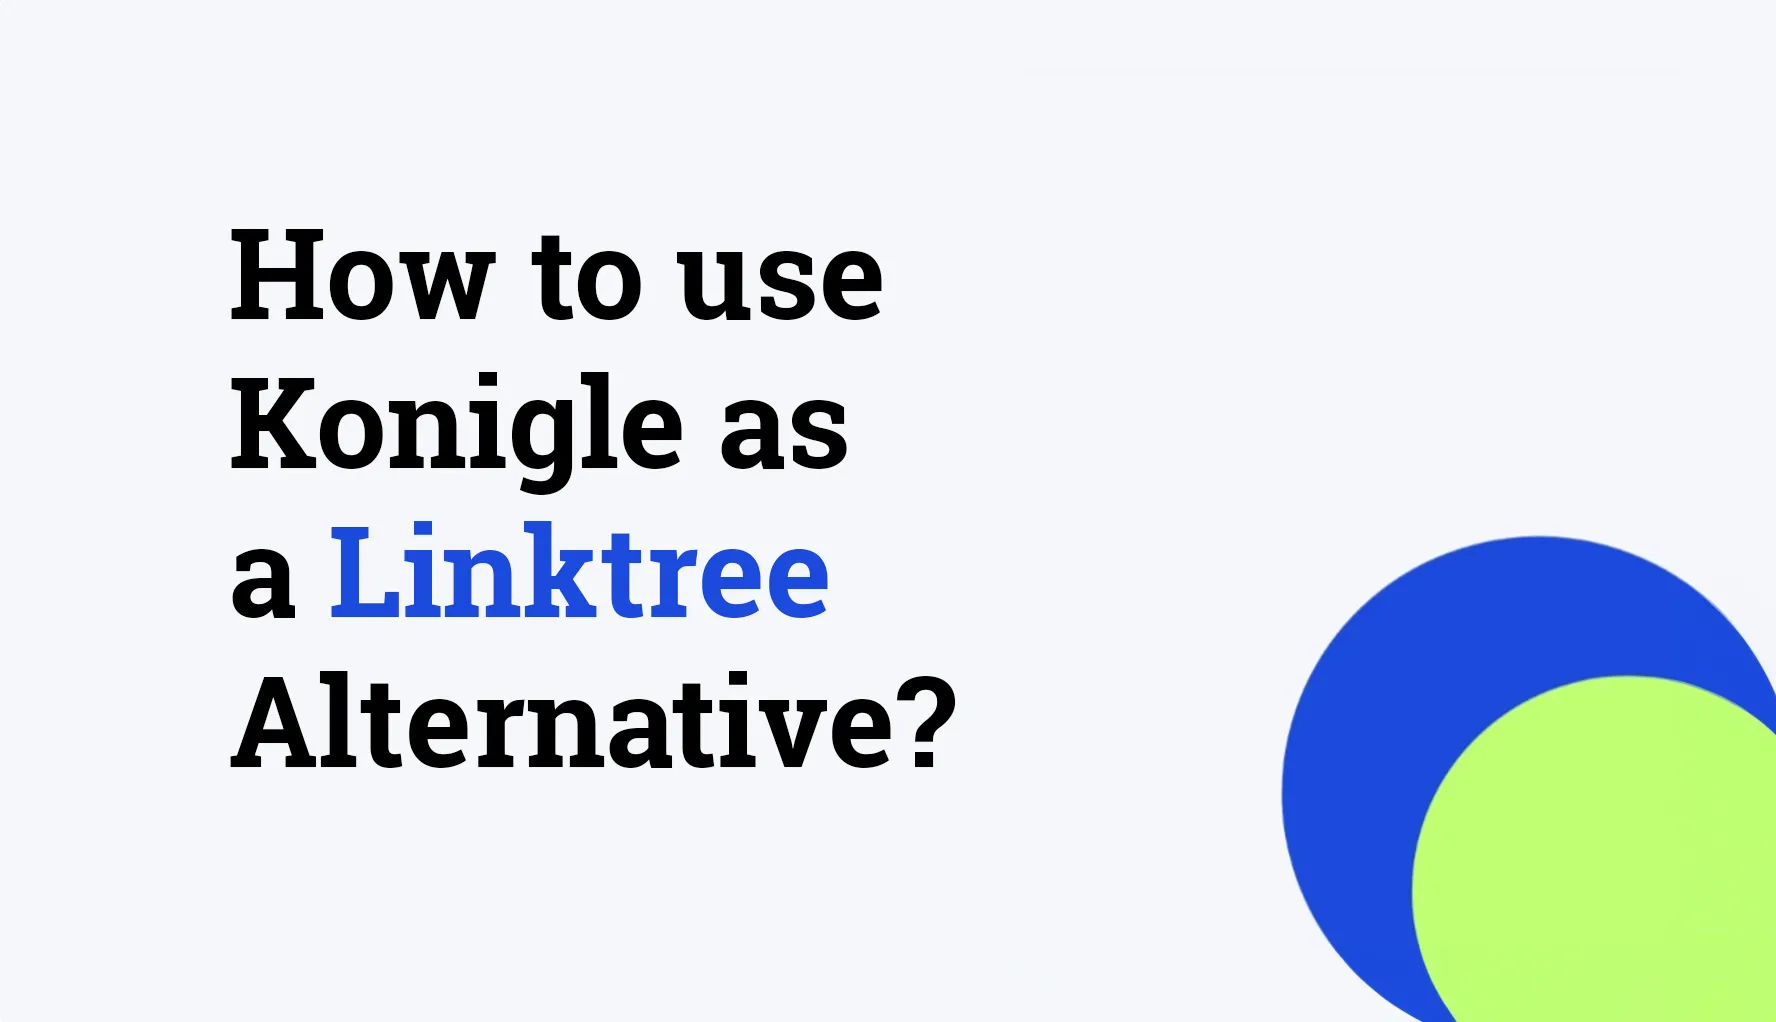 How to use Konigle as a Linktree Alternative?